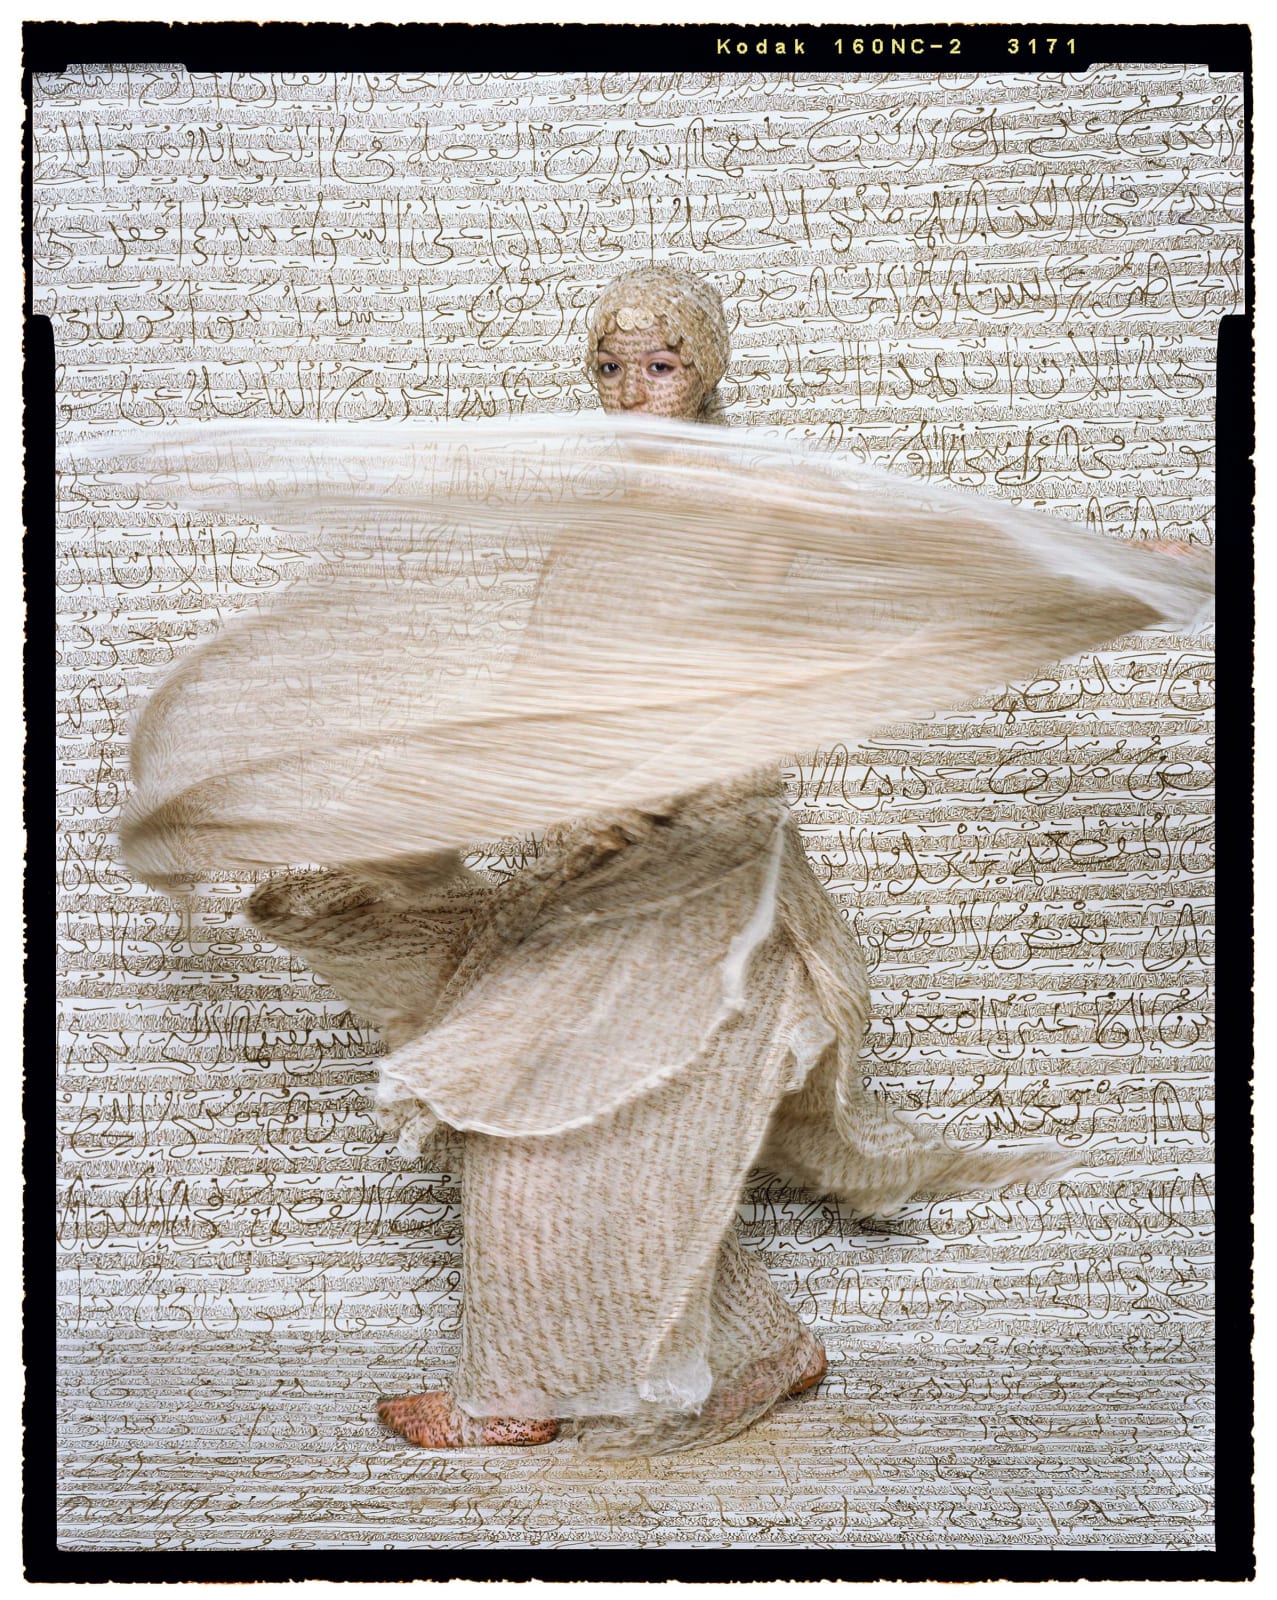 Lalla Essaydi, Dancer #10, Woman dancing with swirling fabric